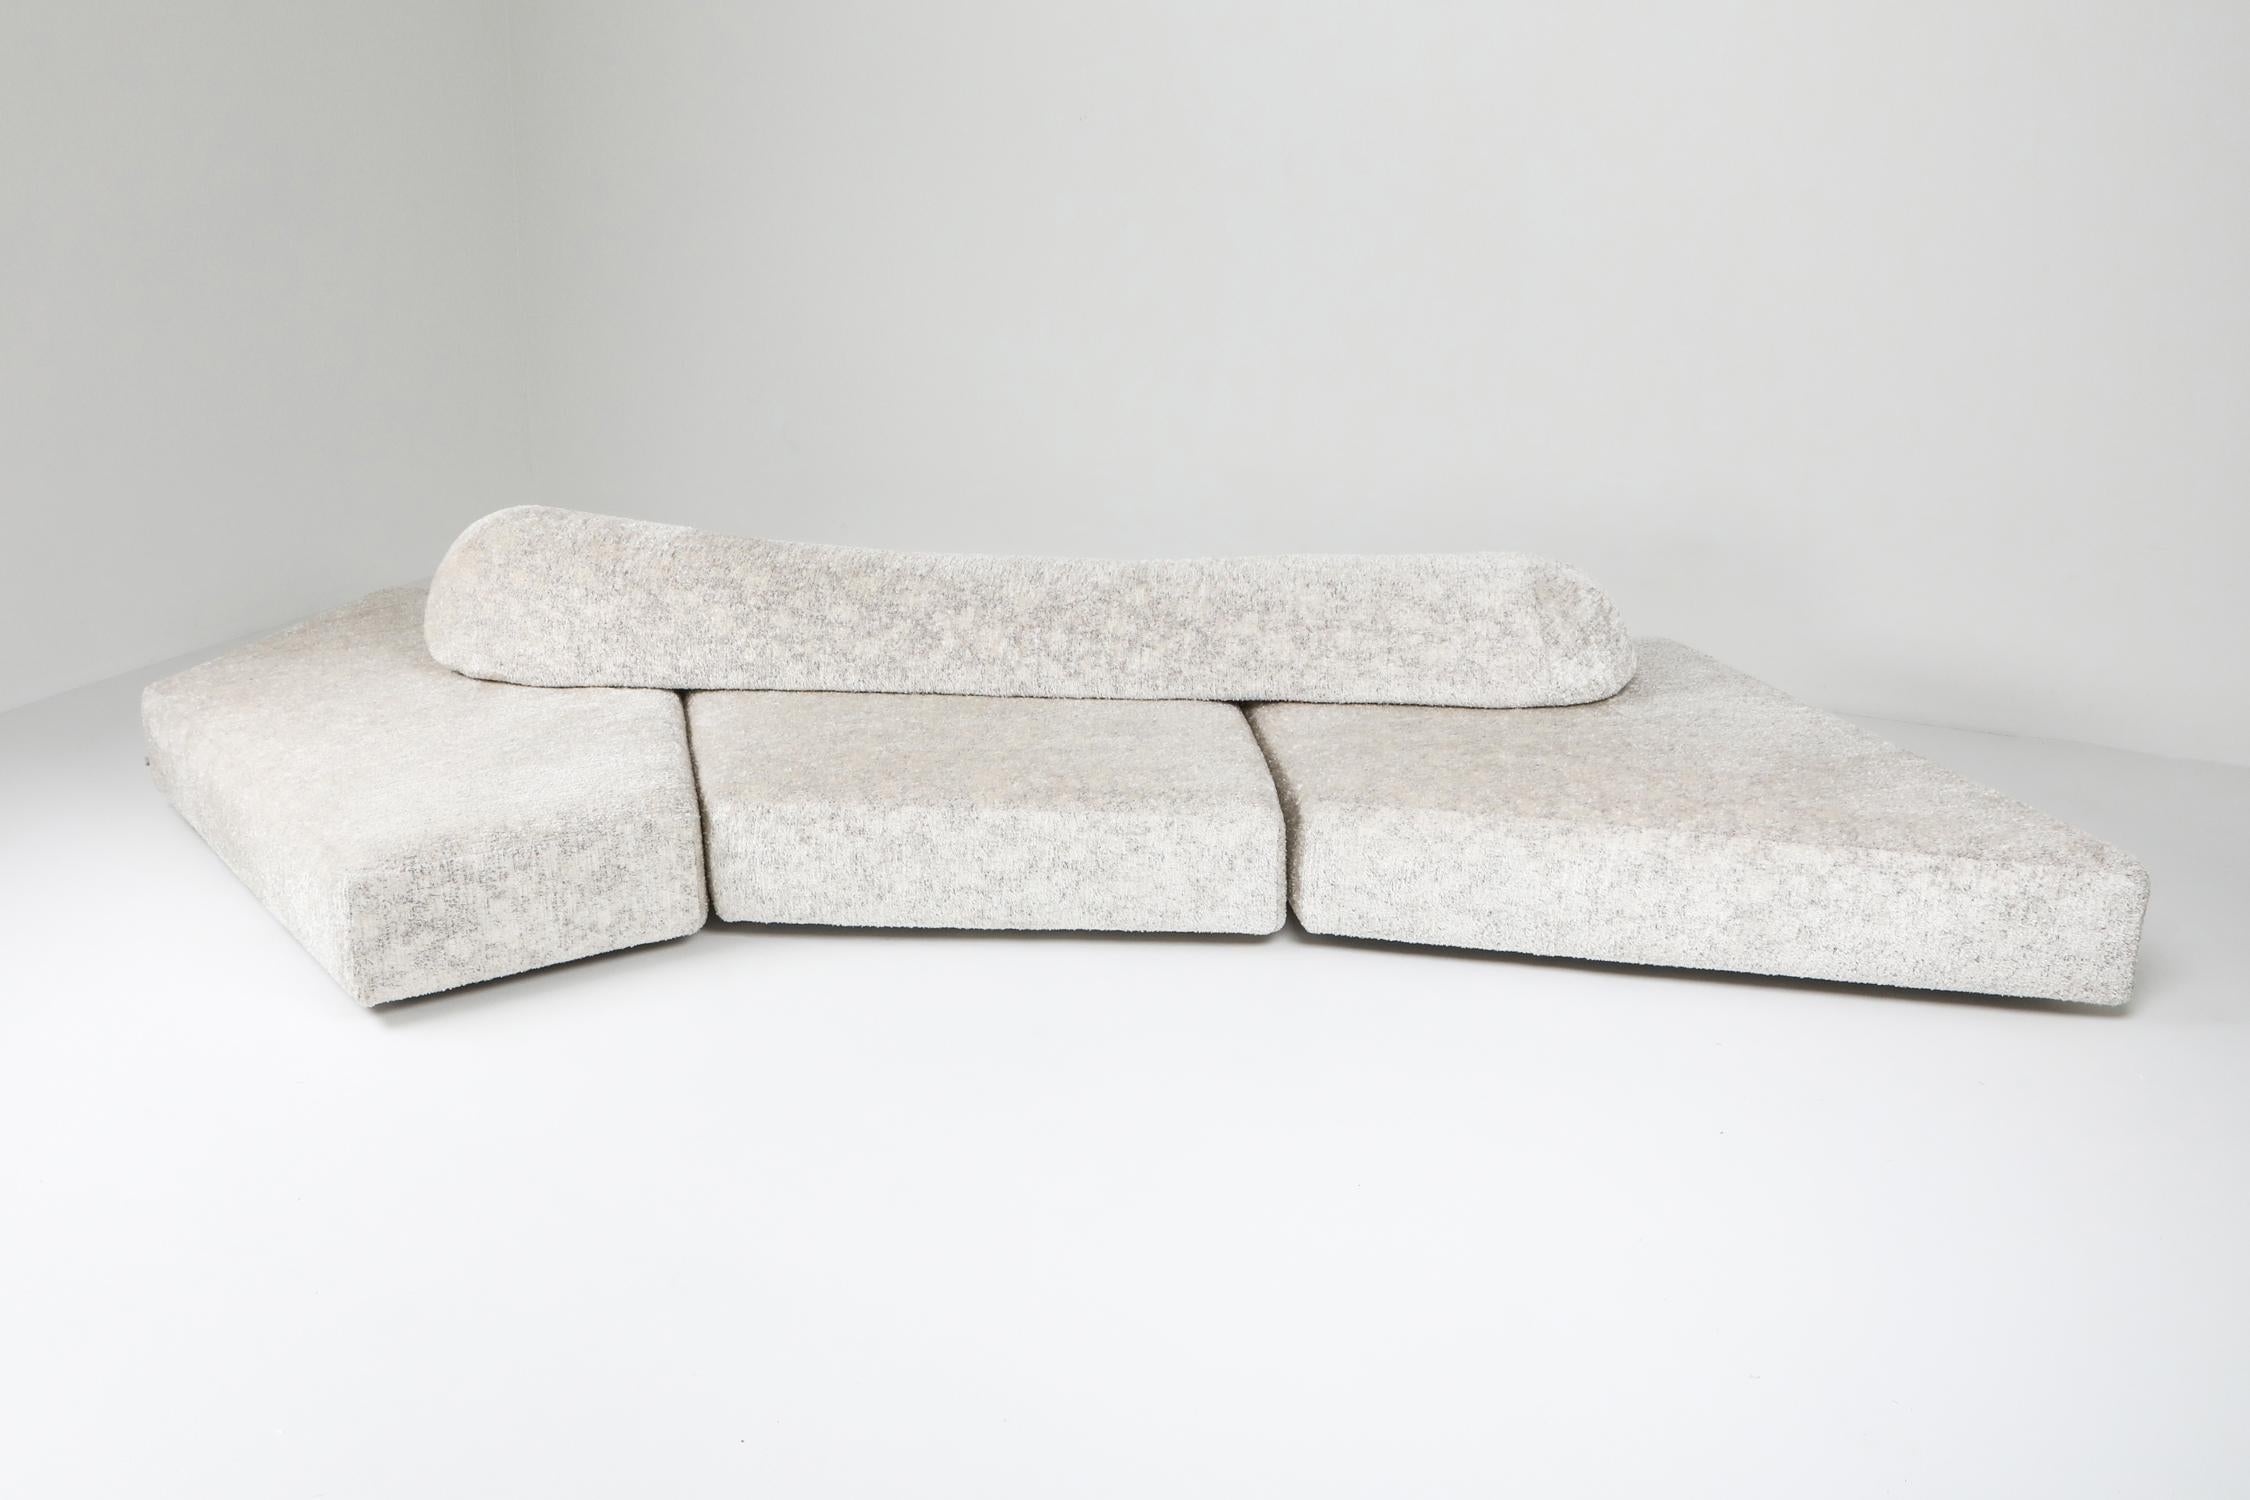 European Edra 'On the Rocks' sectional sofa by Francesco Binfare